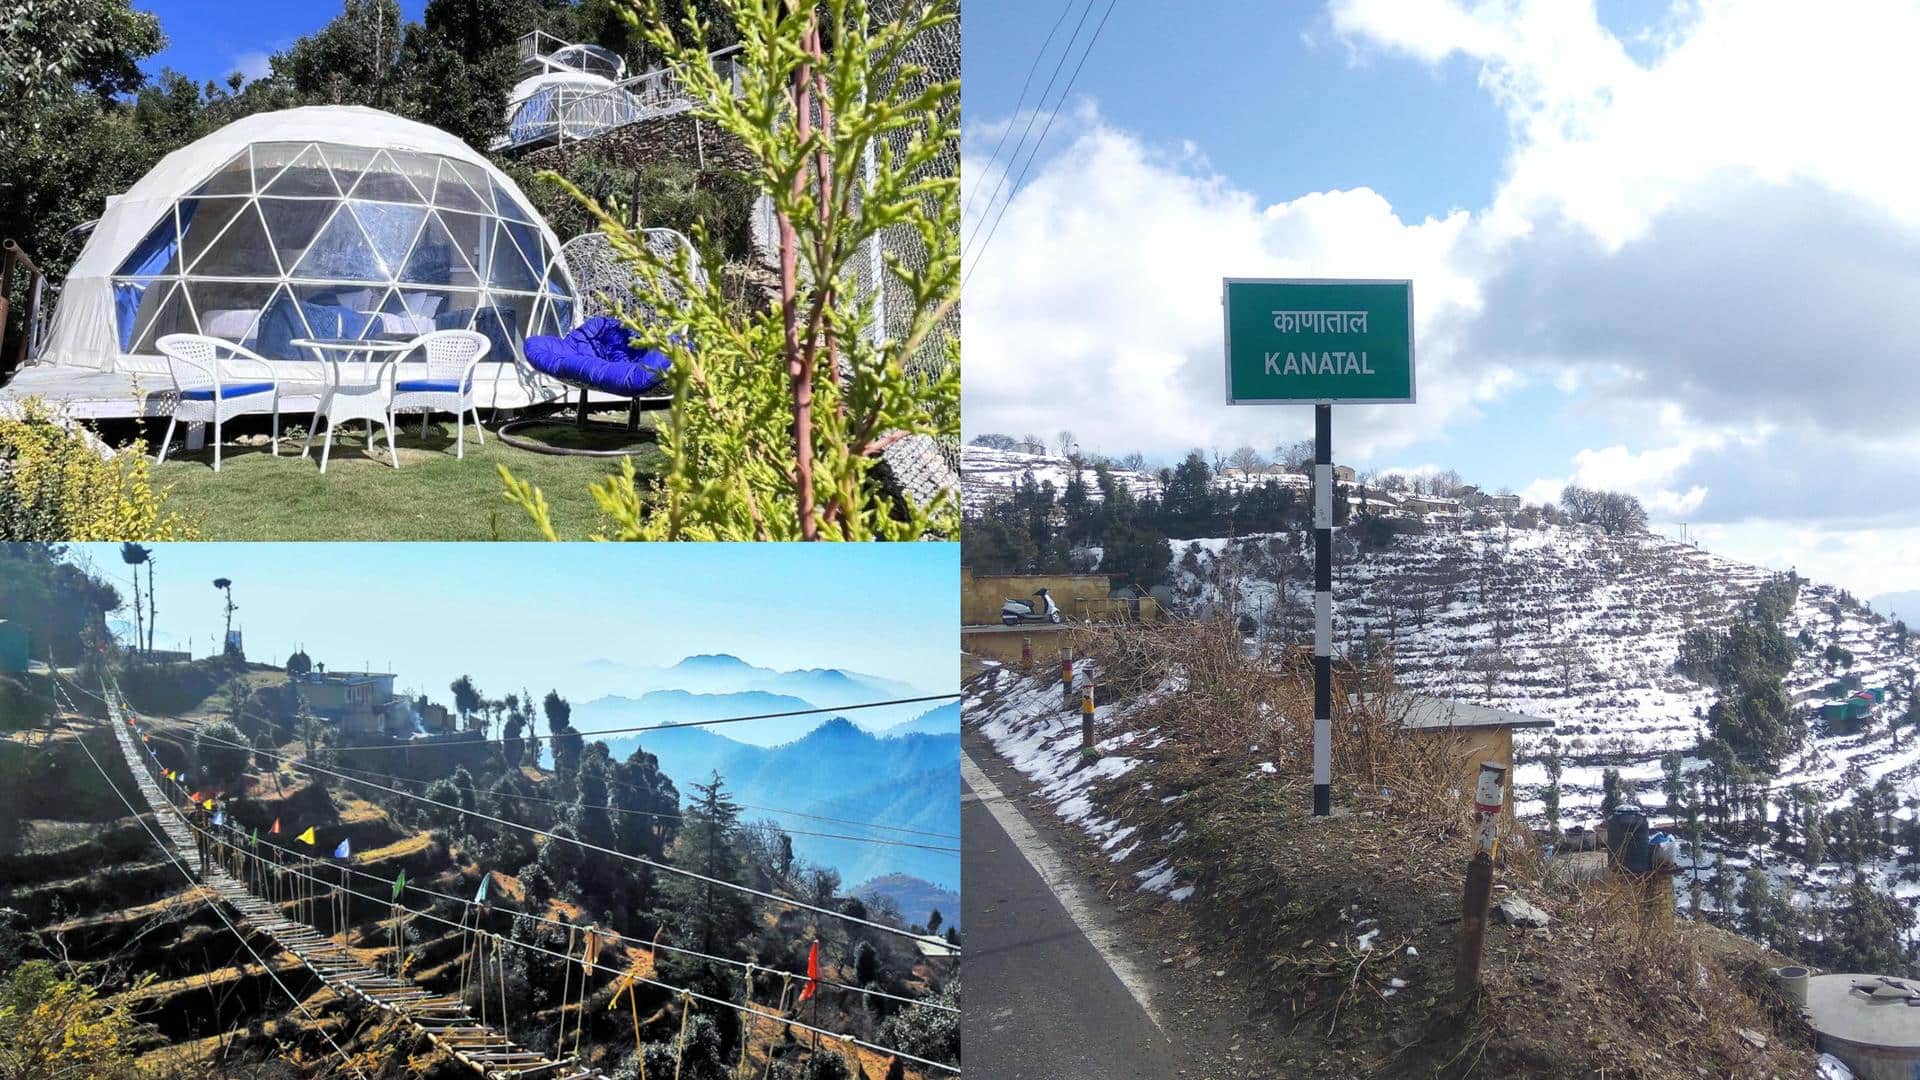 5 tourist places to visit in Kanatal, Uttarakhand 